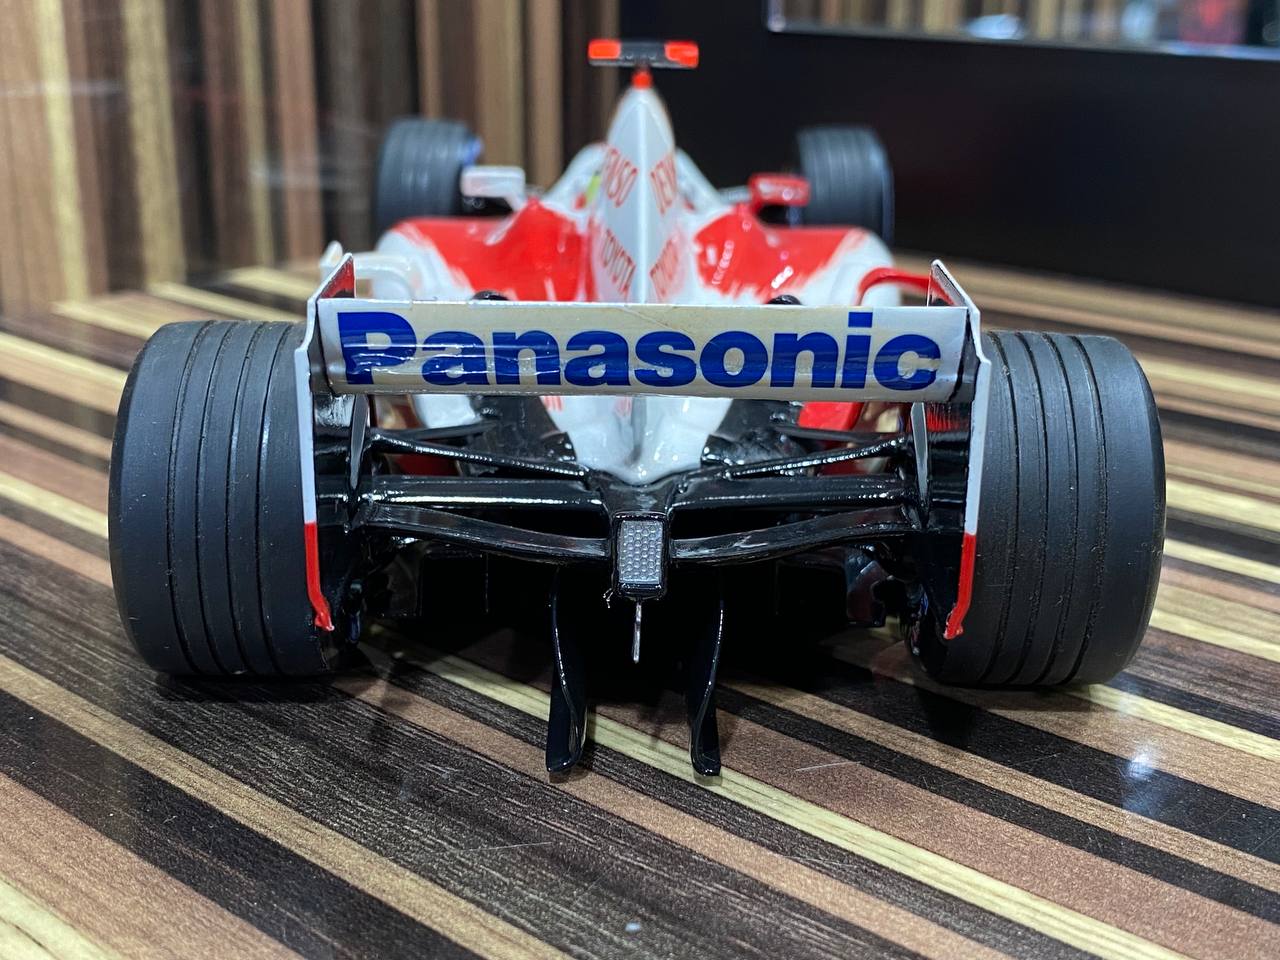 Panasonic Toyota Racing TF104 C. Da Matta Formula 1 Minichamps